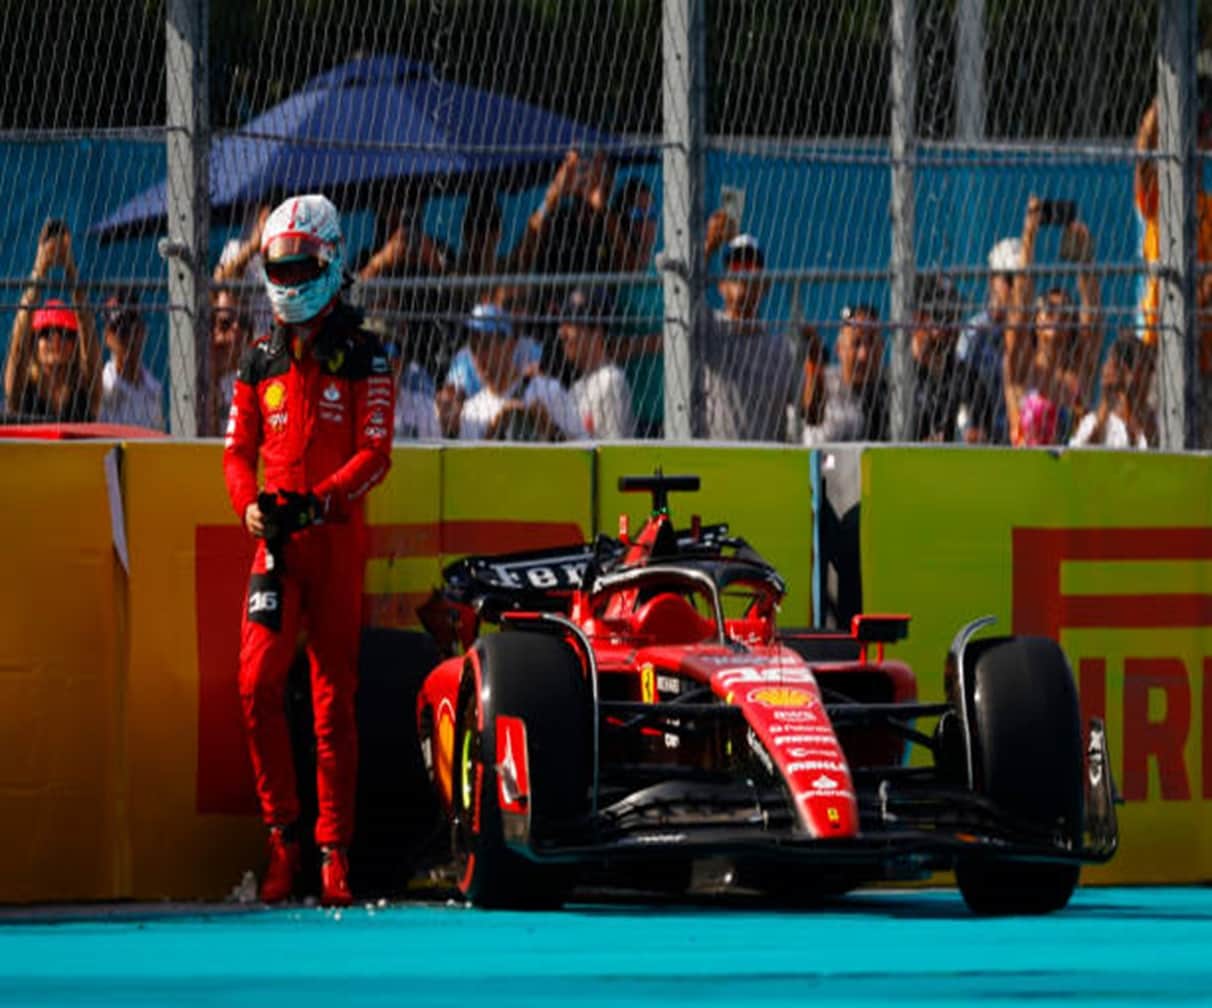 Ferrari presented the car that Charles Leclerc and Carlos Sainz will drive in the Miami Grand Prix